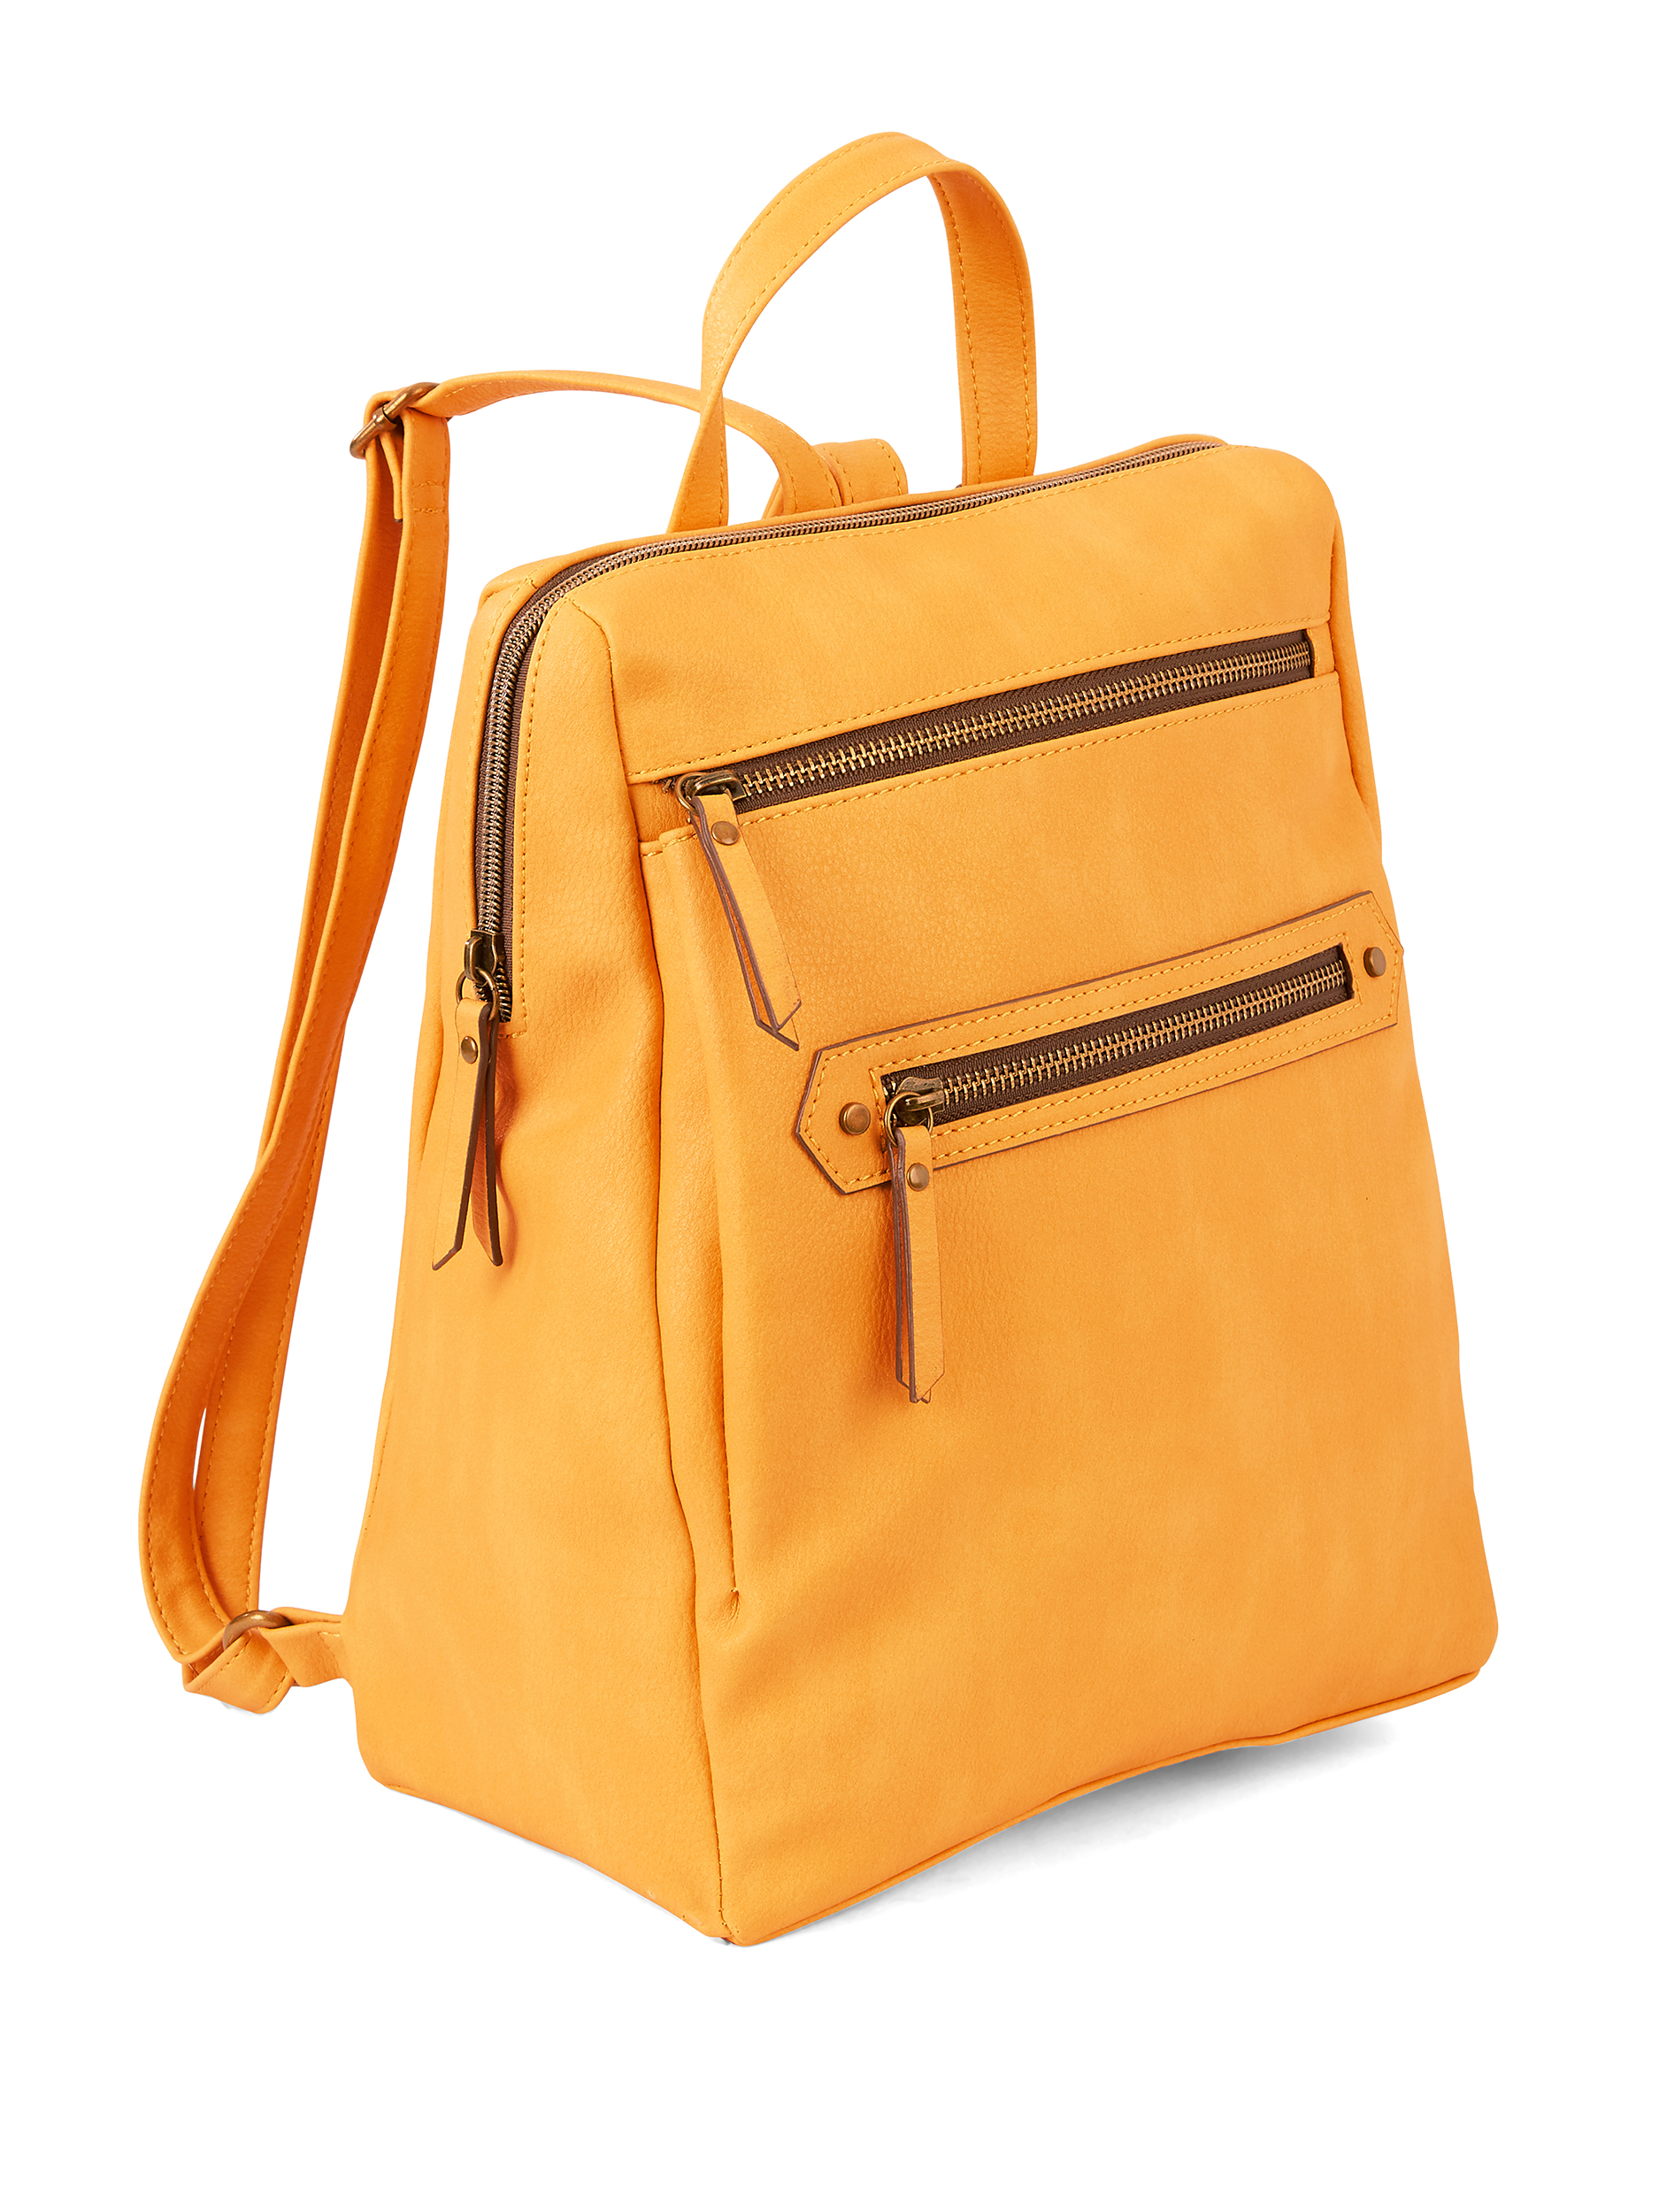 Time & Tru Cucamonga Backpack, Mustard - image 3 of 4